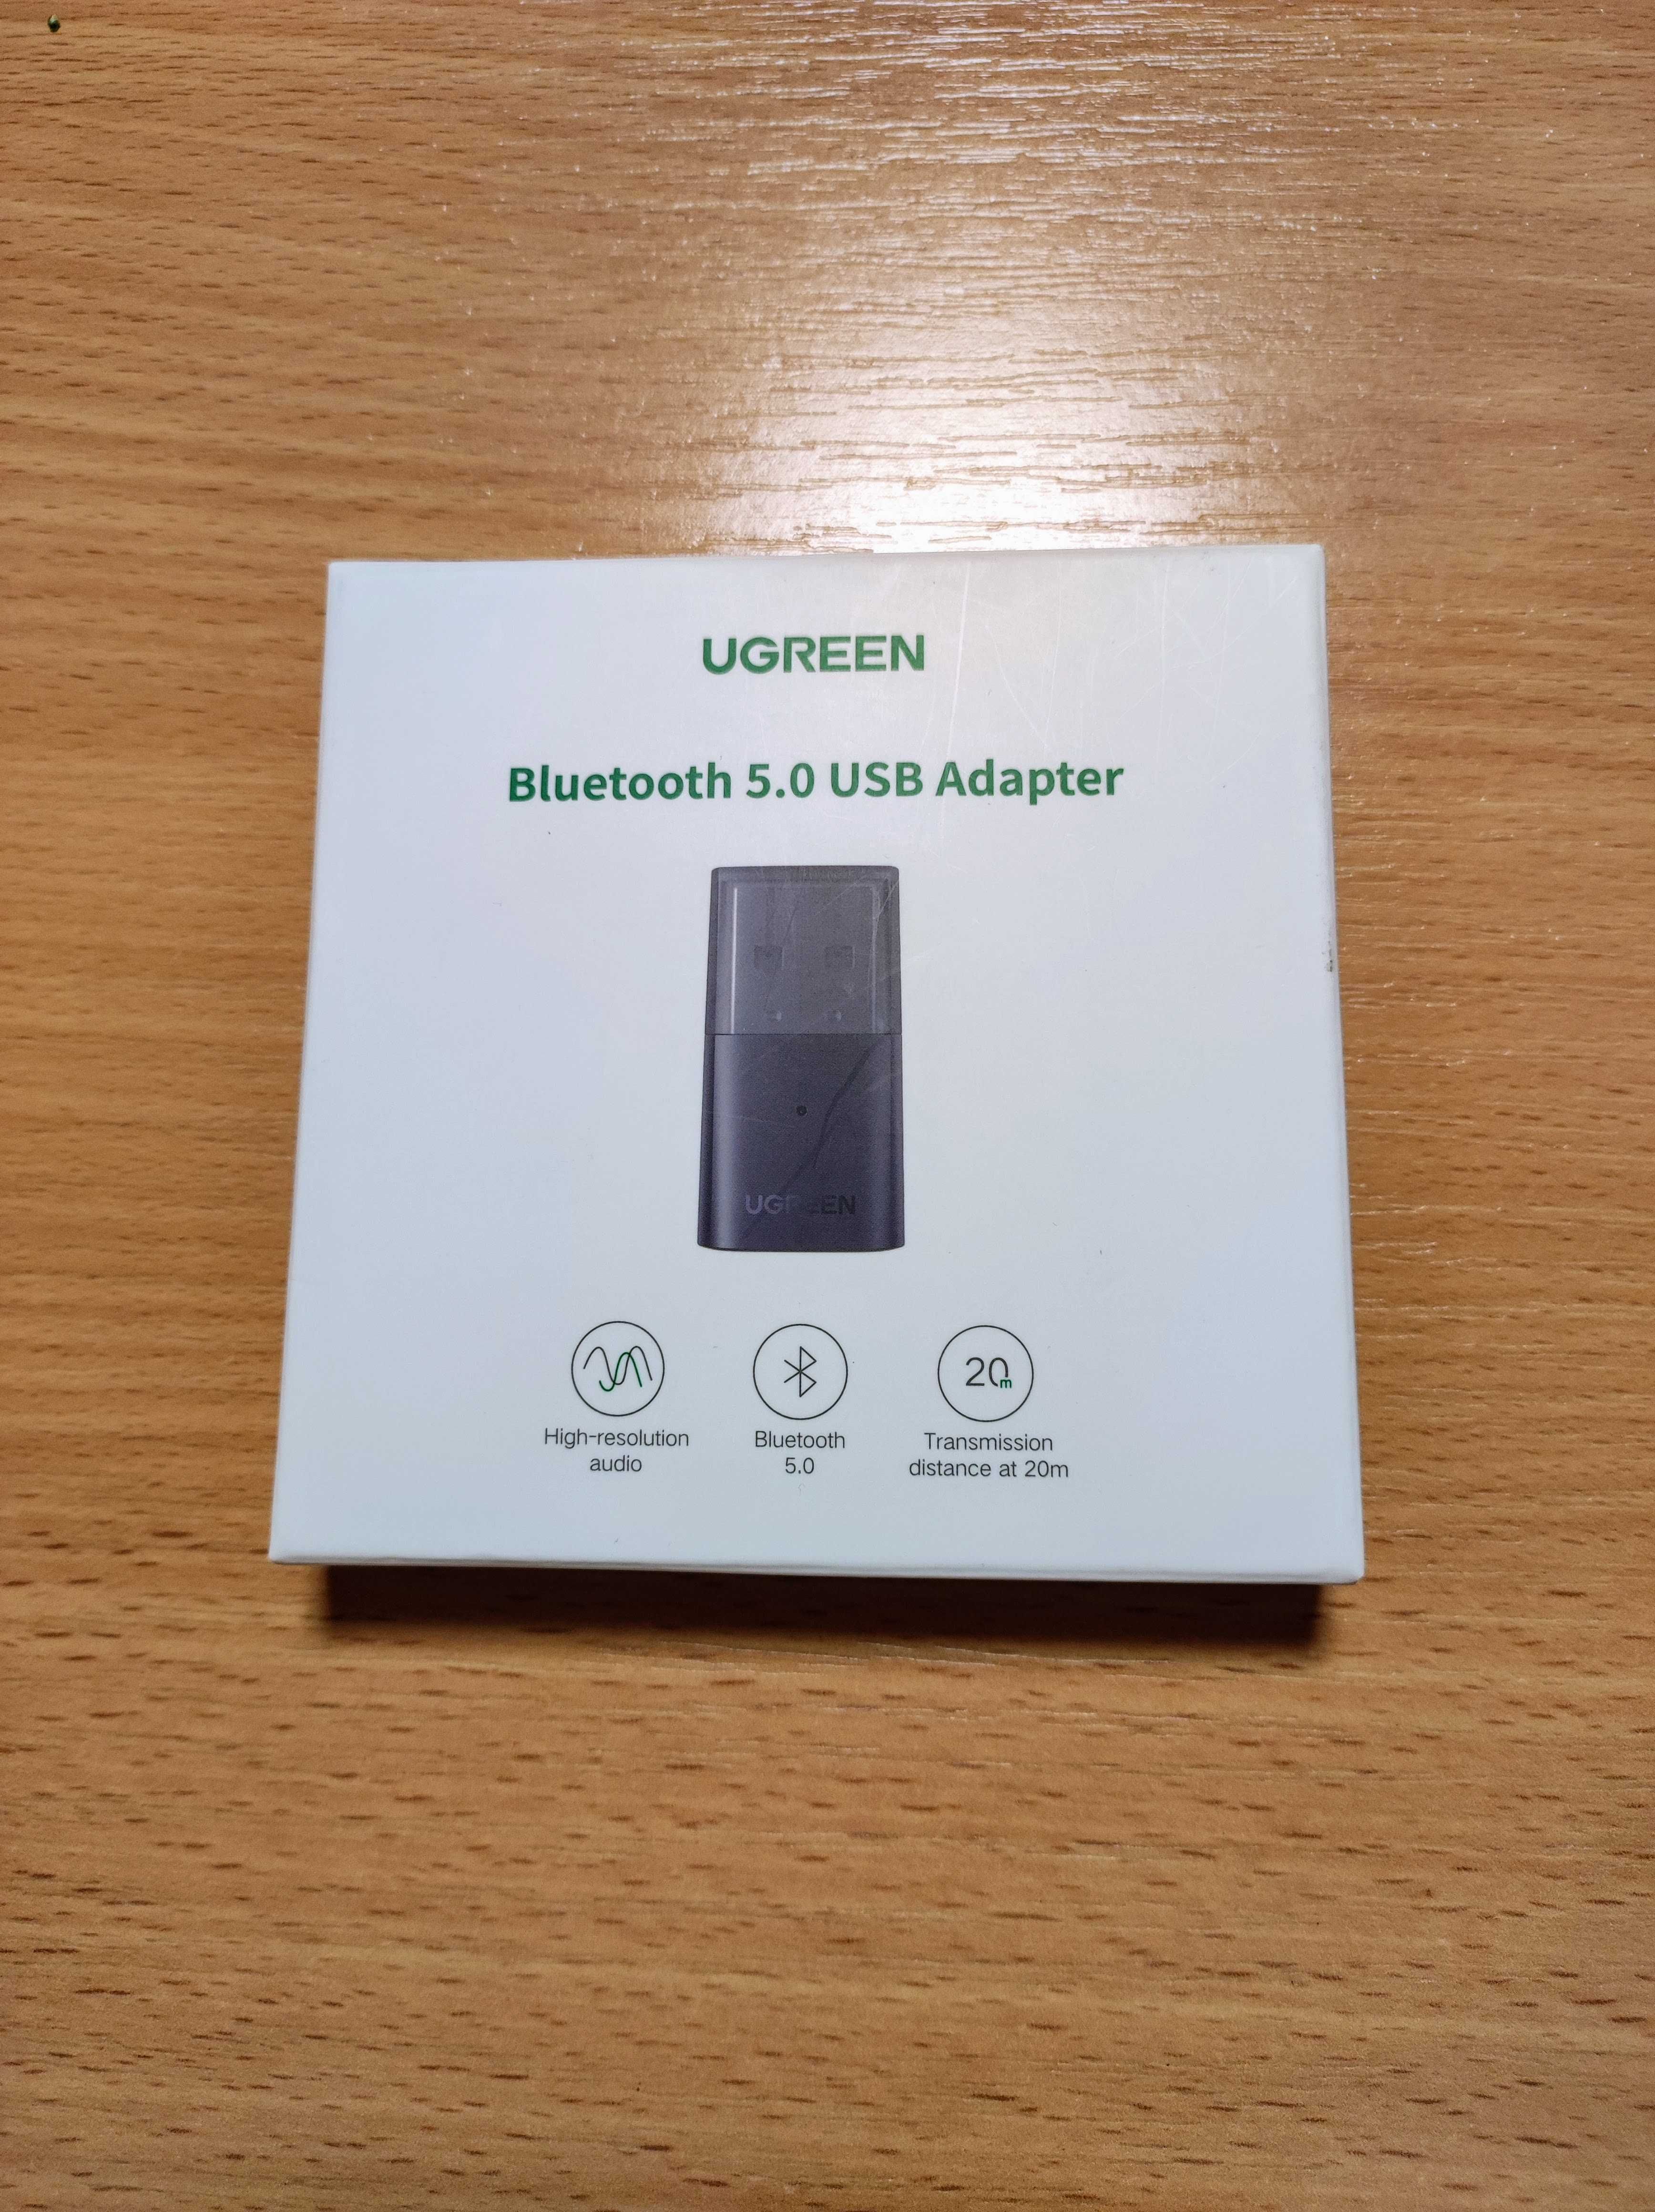 Bluetooth-адаптер Ugreen CM390